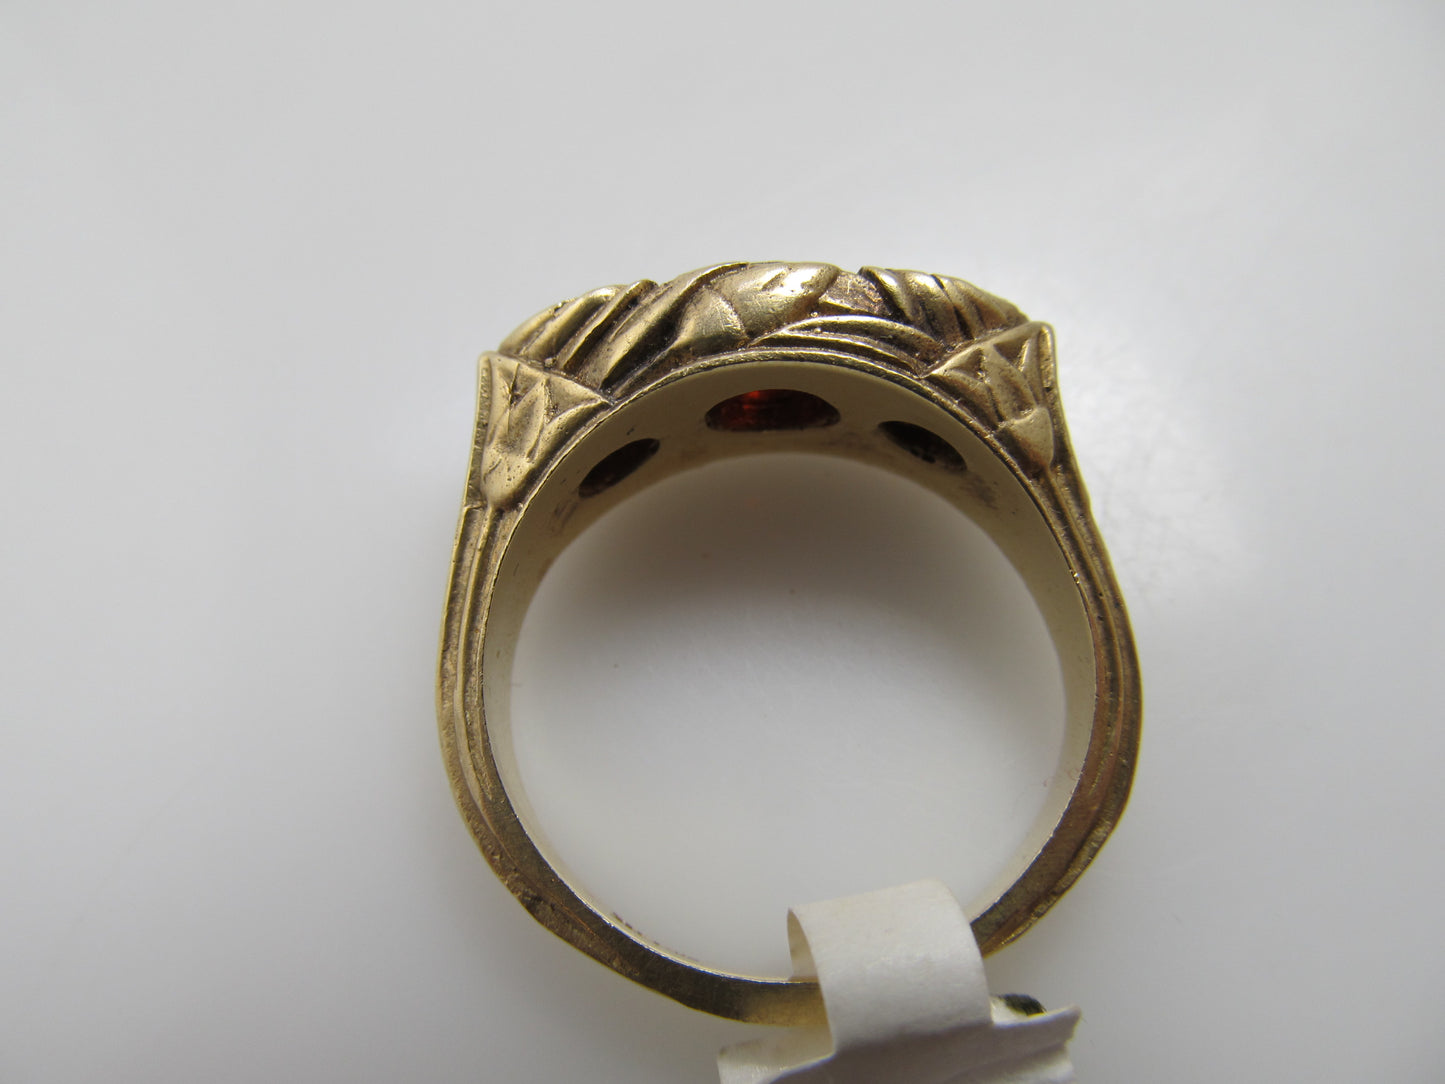 Antique 3 stone garnet ring